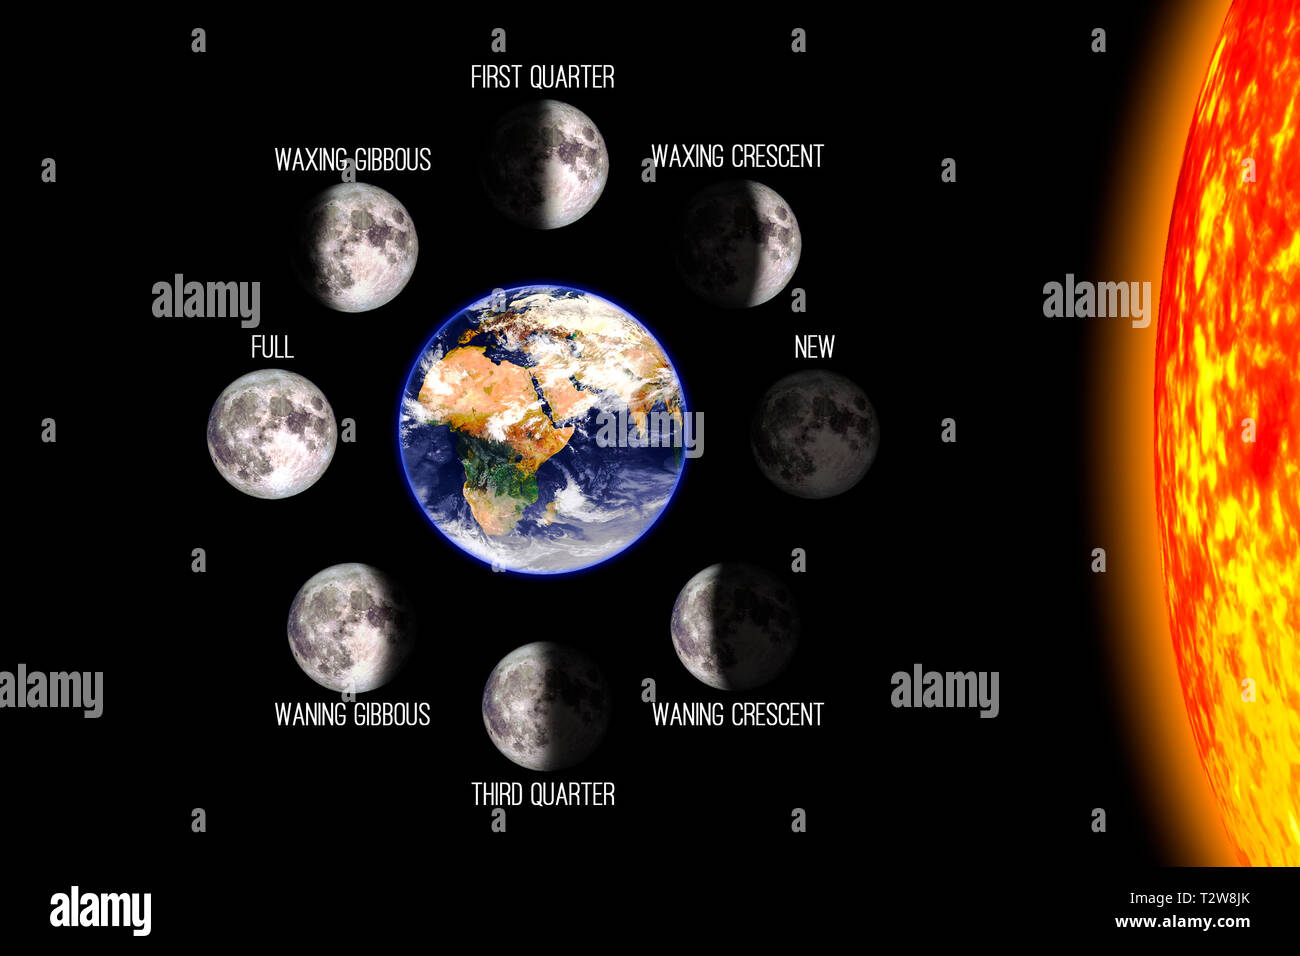 Lunar Phases Model